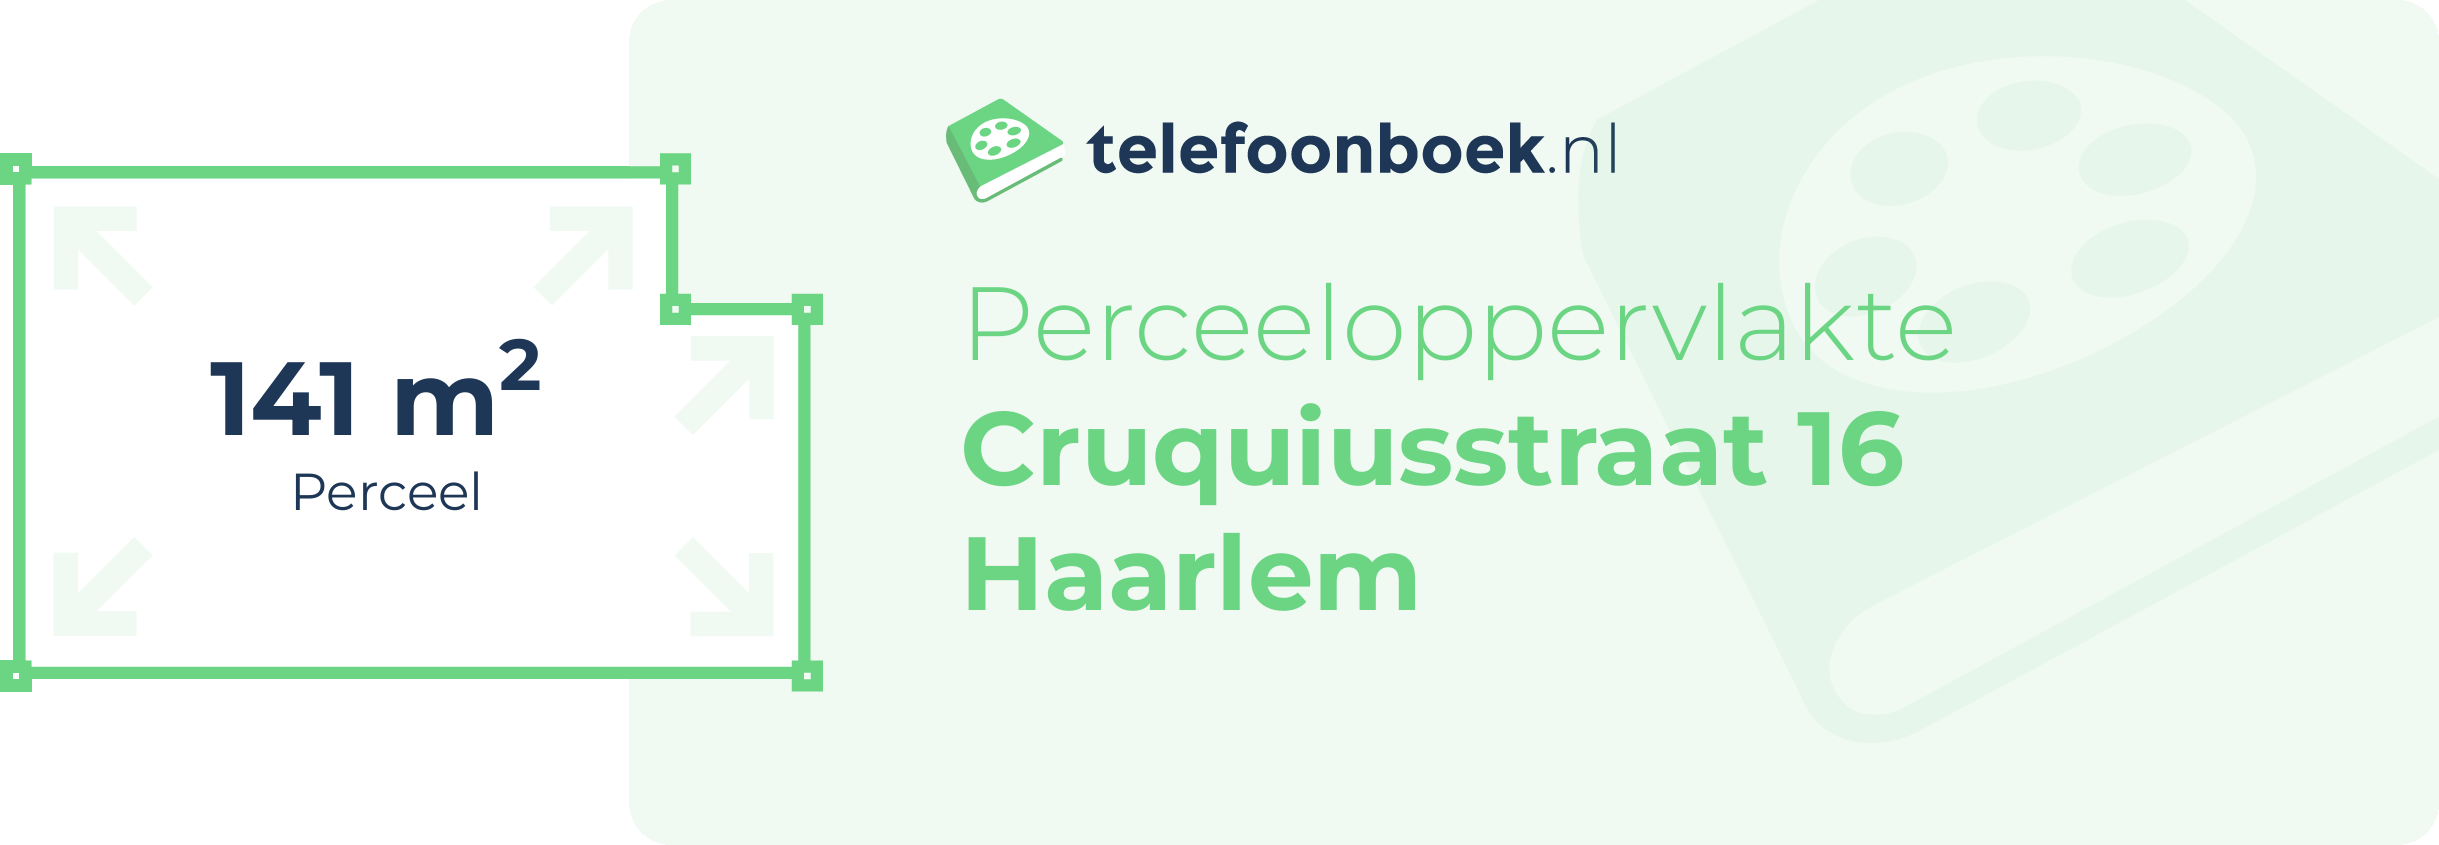 Perceeloppervlakte Cruquiusstraat 16 Haarlem